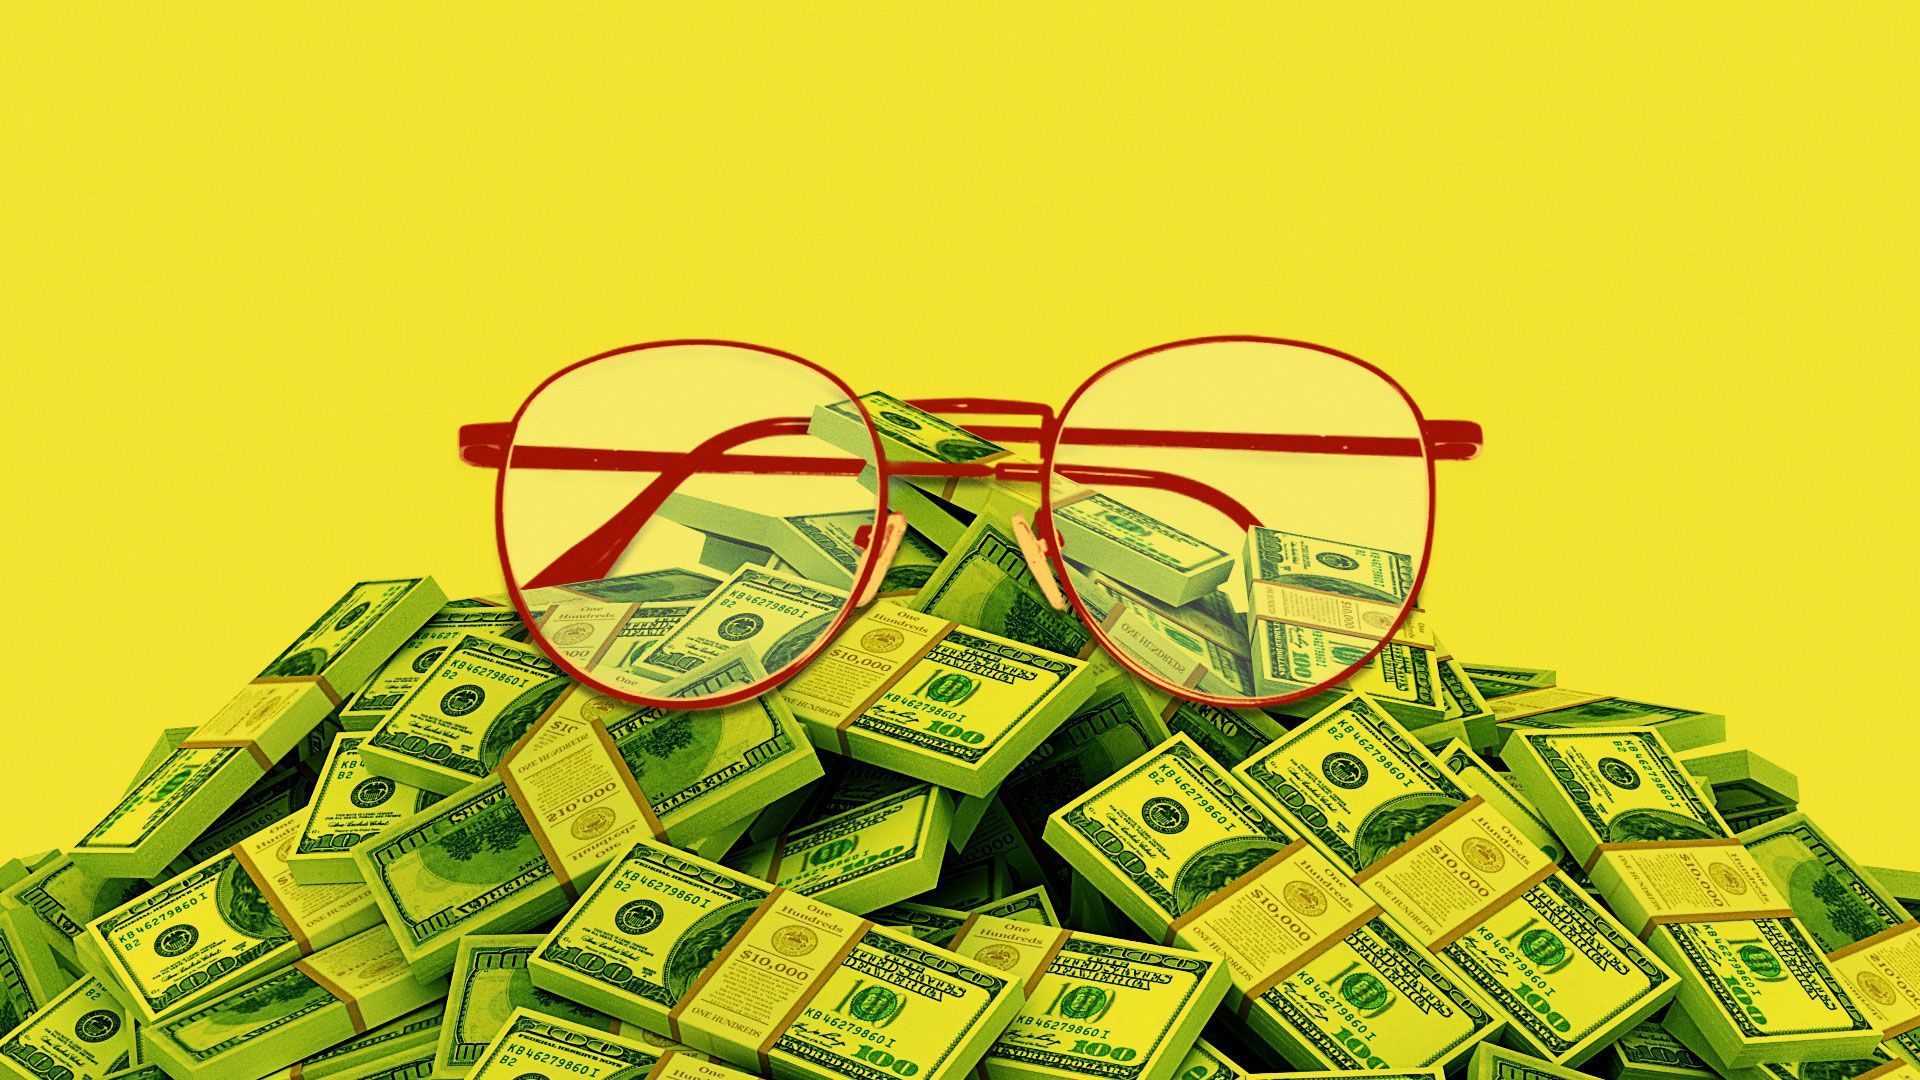 eyeglasses on a pile of money